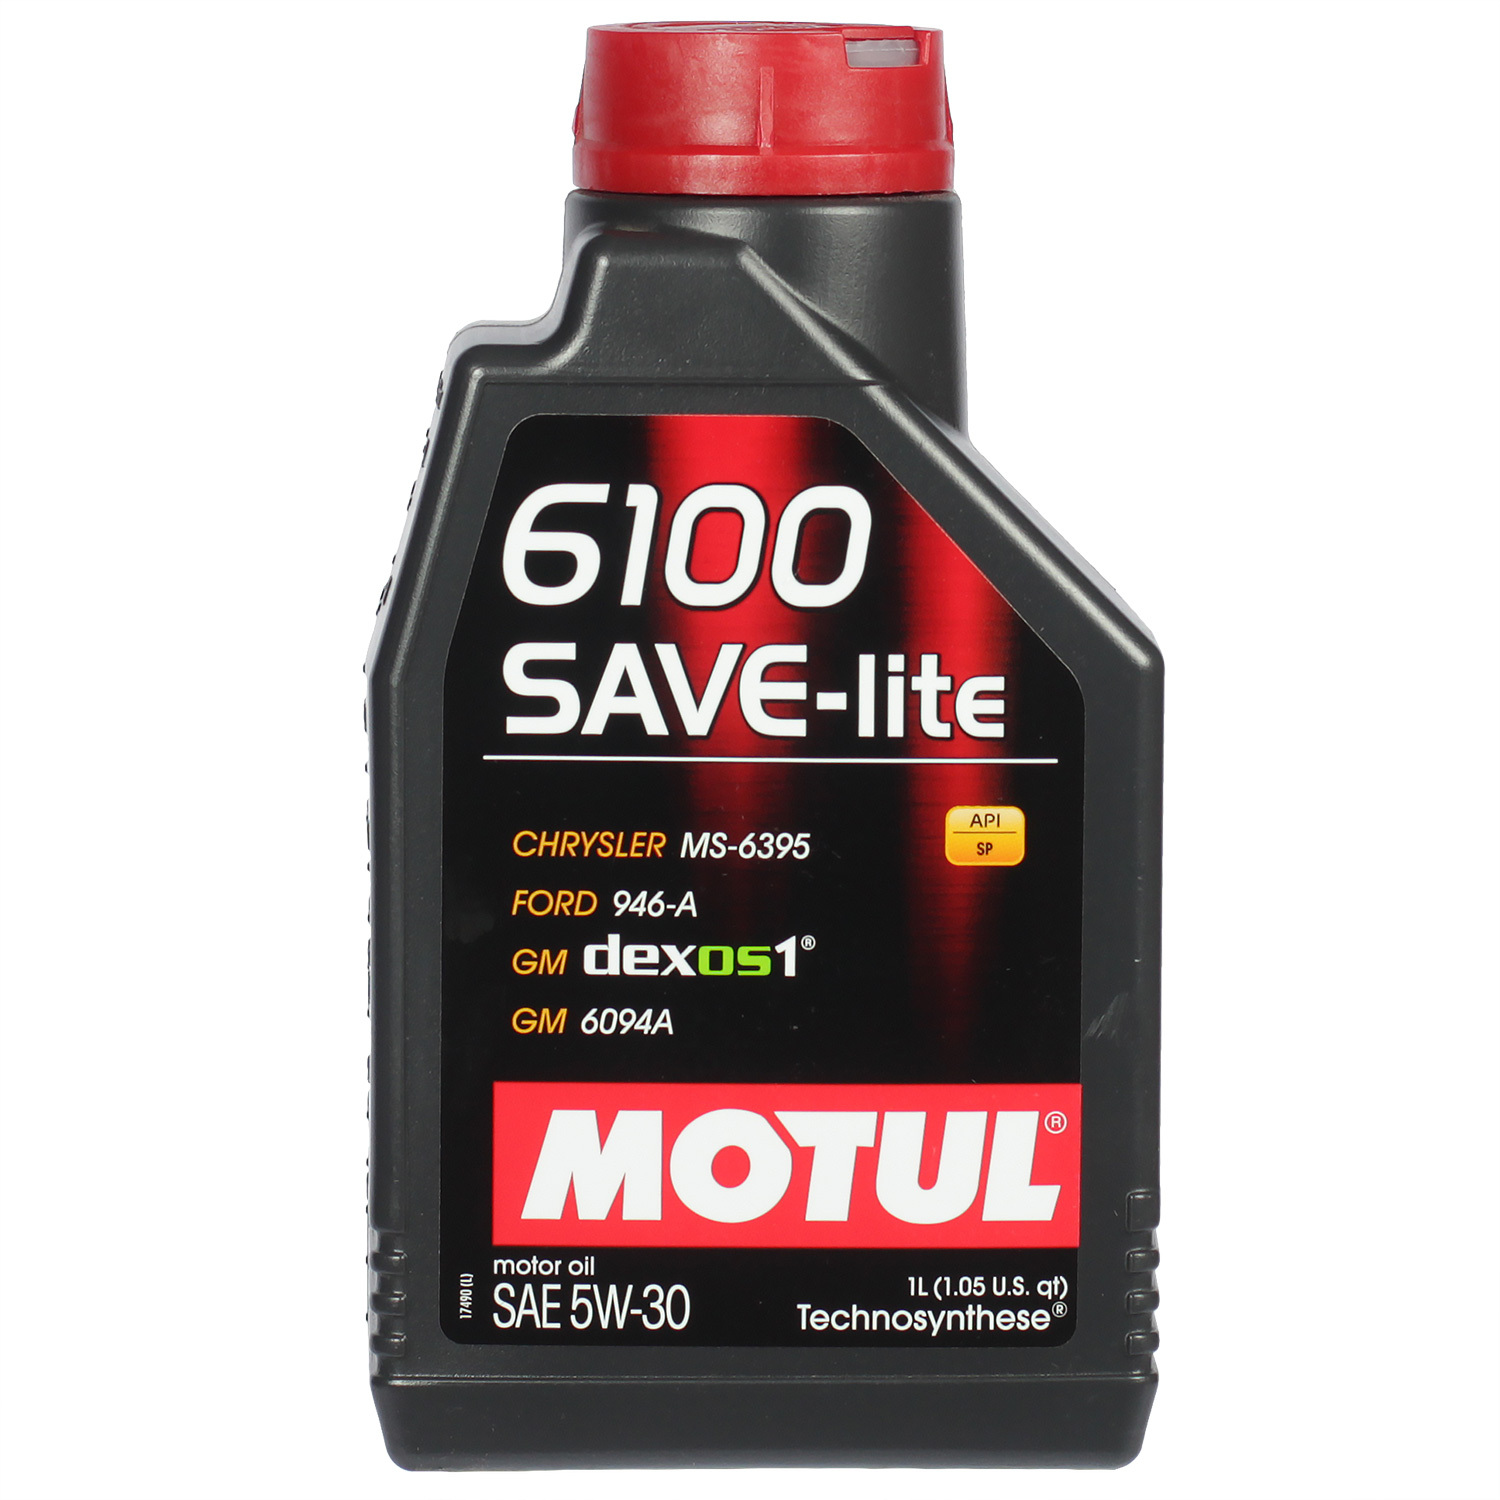 Motul Моторное масло Motul 6100 Save-lite 5W-30, 1 л motul моторное масло motul 6100 save lite 5w 30 1 л